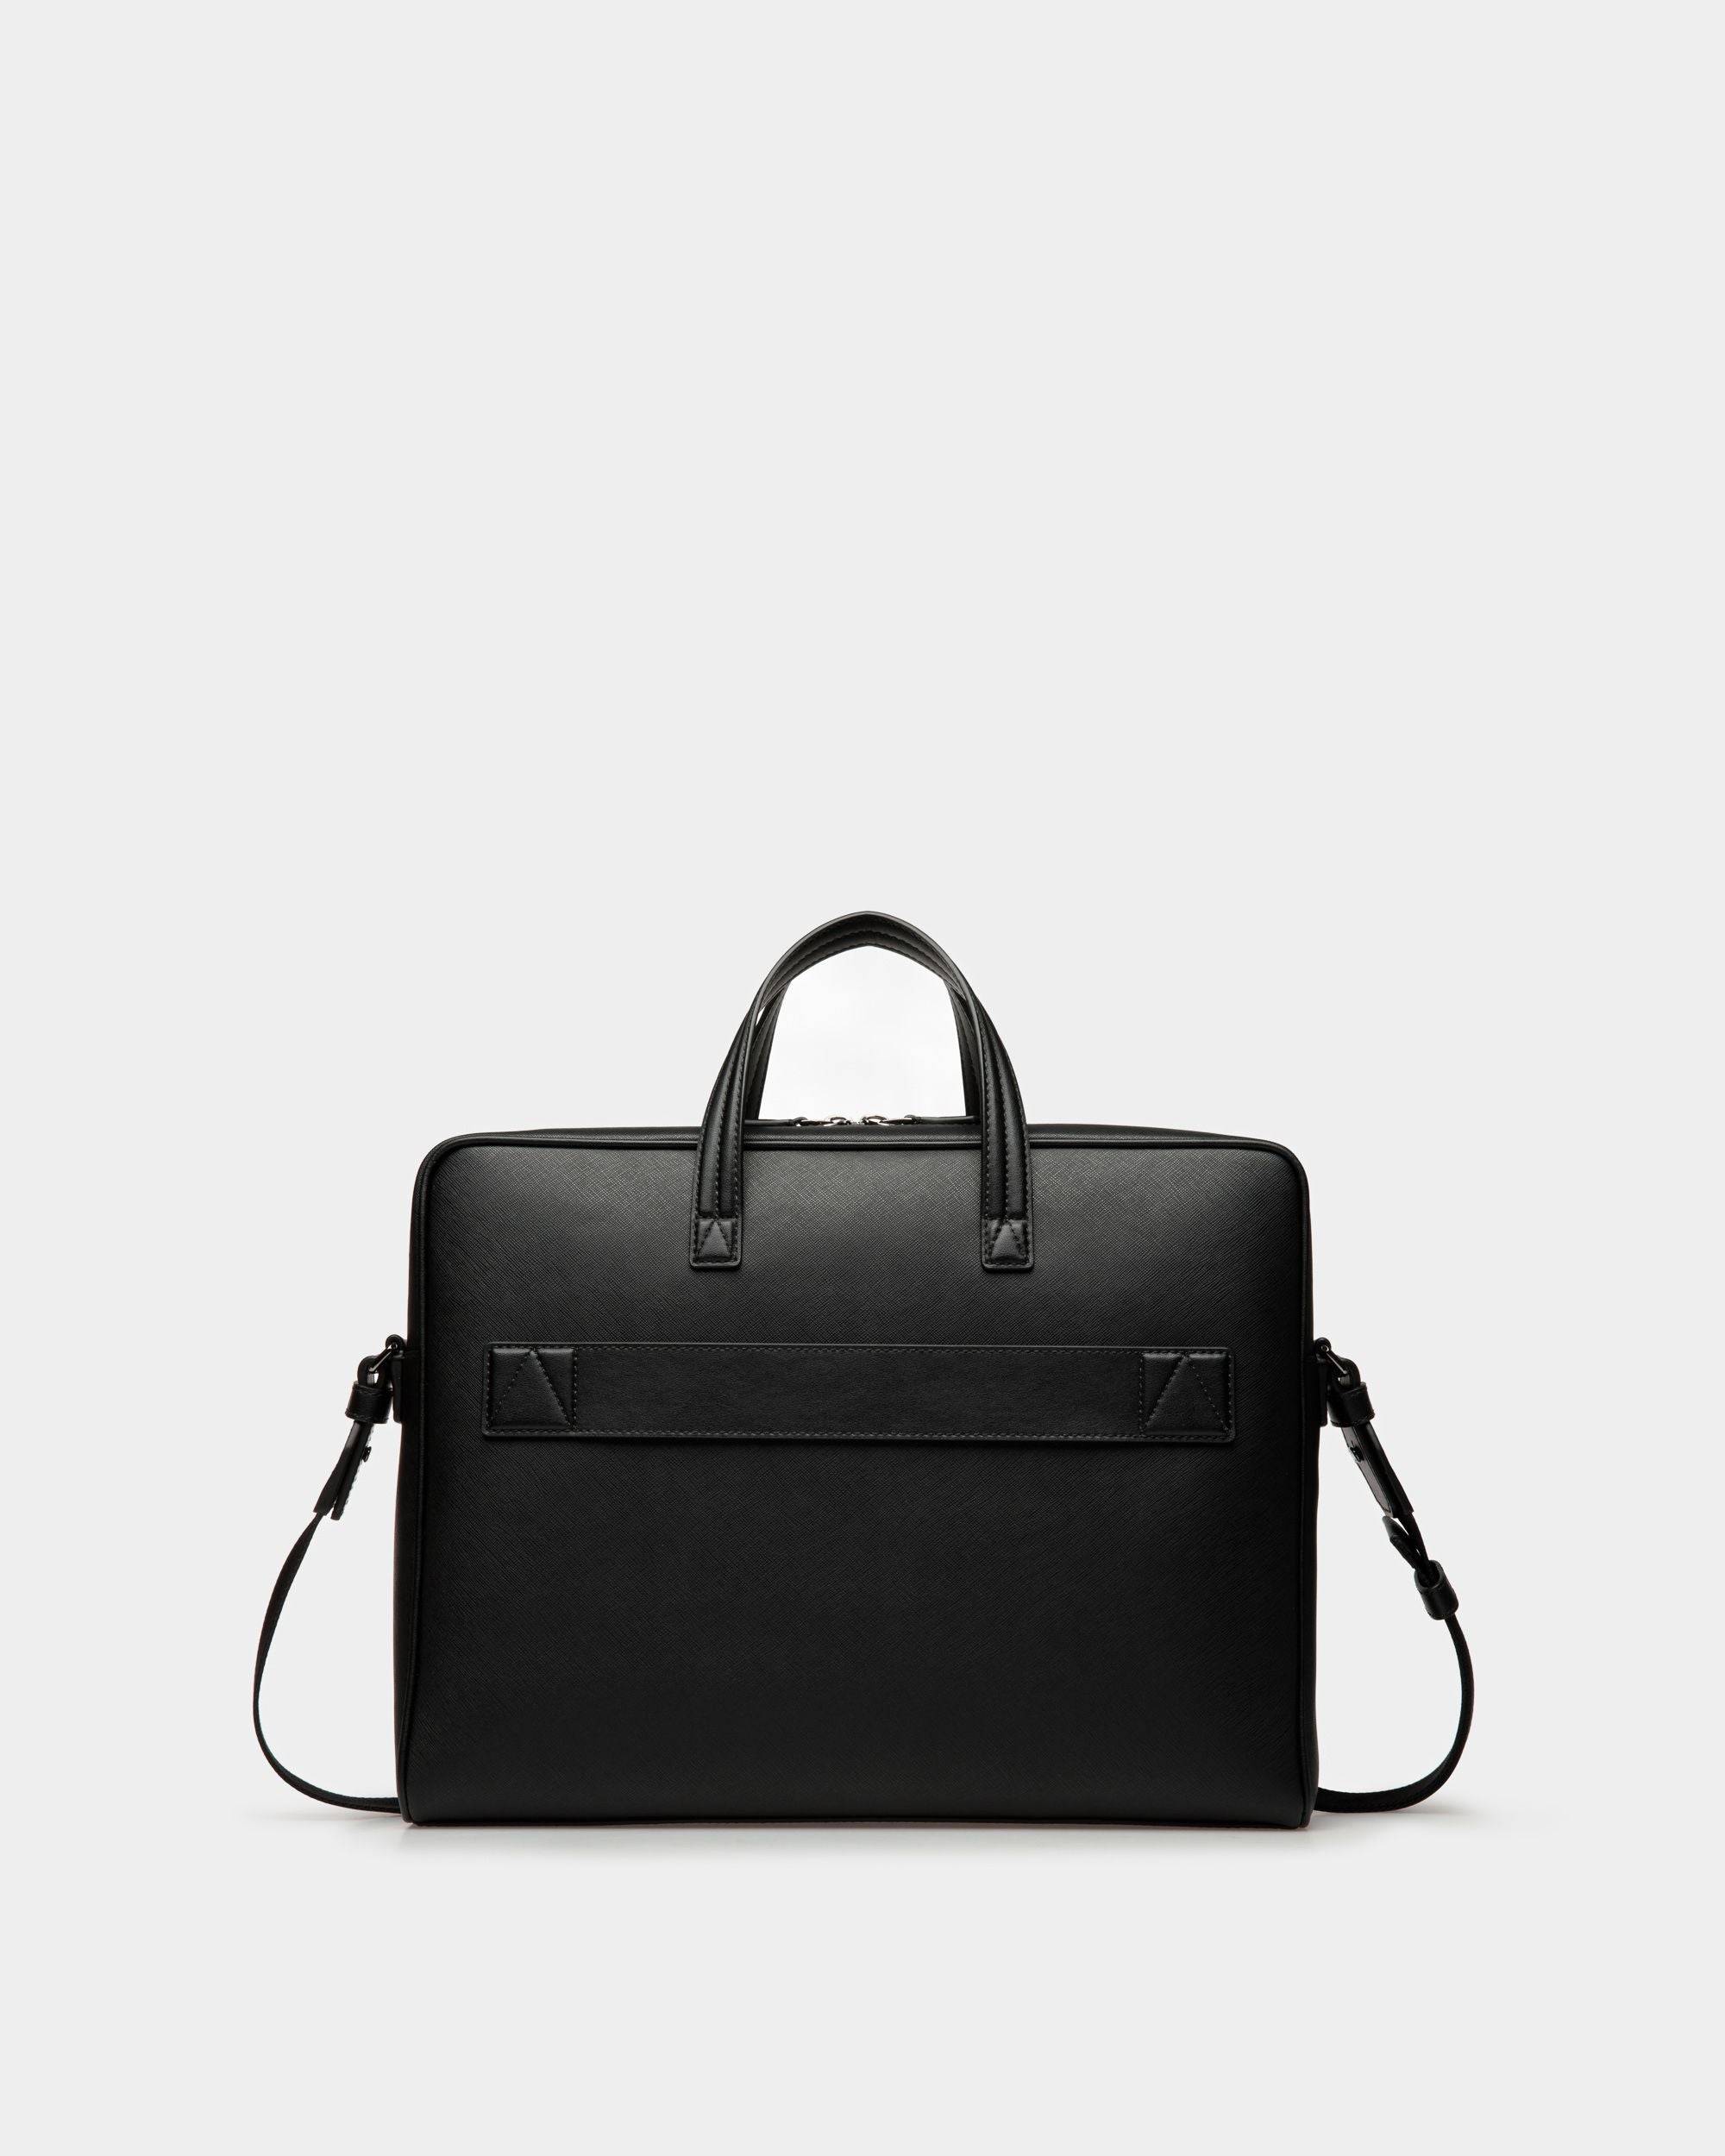 Mikes | Men's Business Bag | Black Leather | Bally | Still Life Back